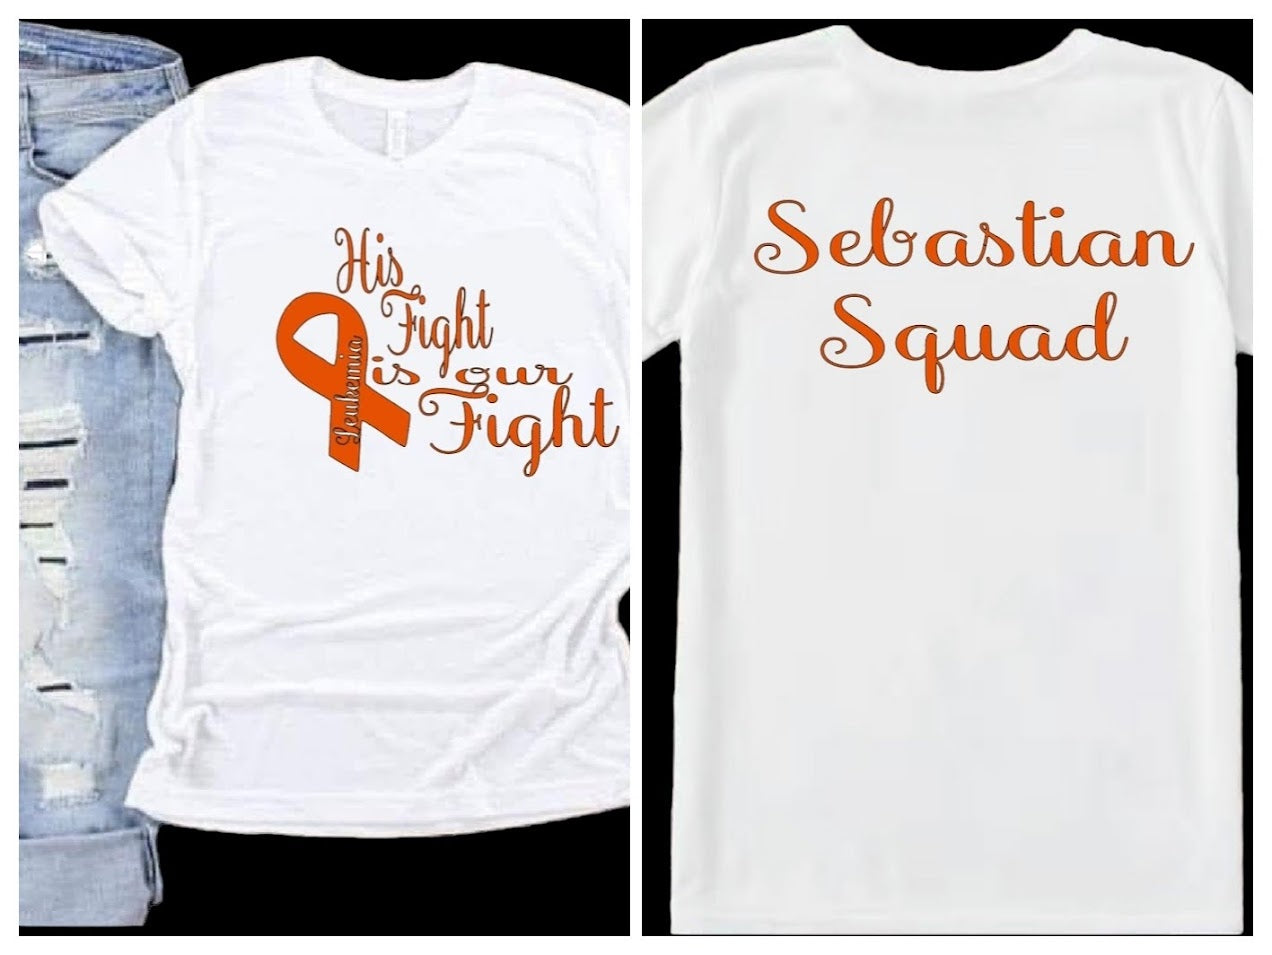 Sebastian Squad T-shirts